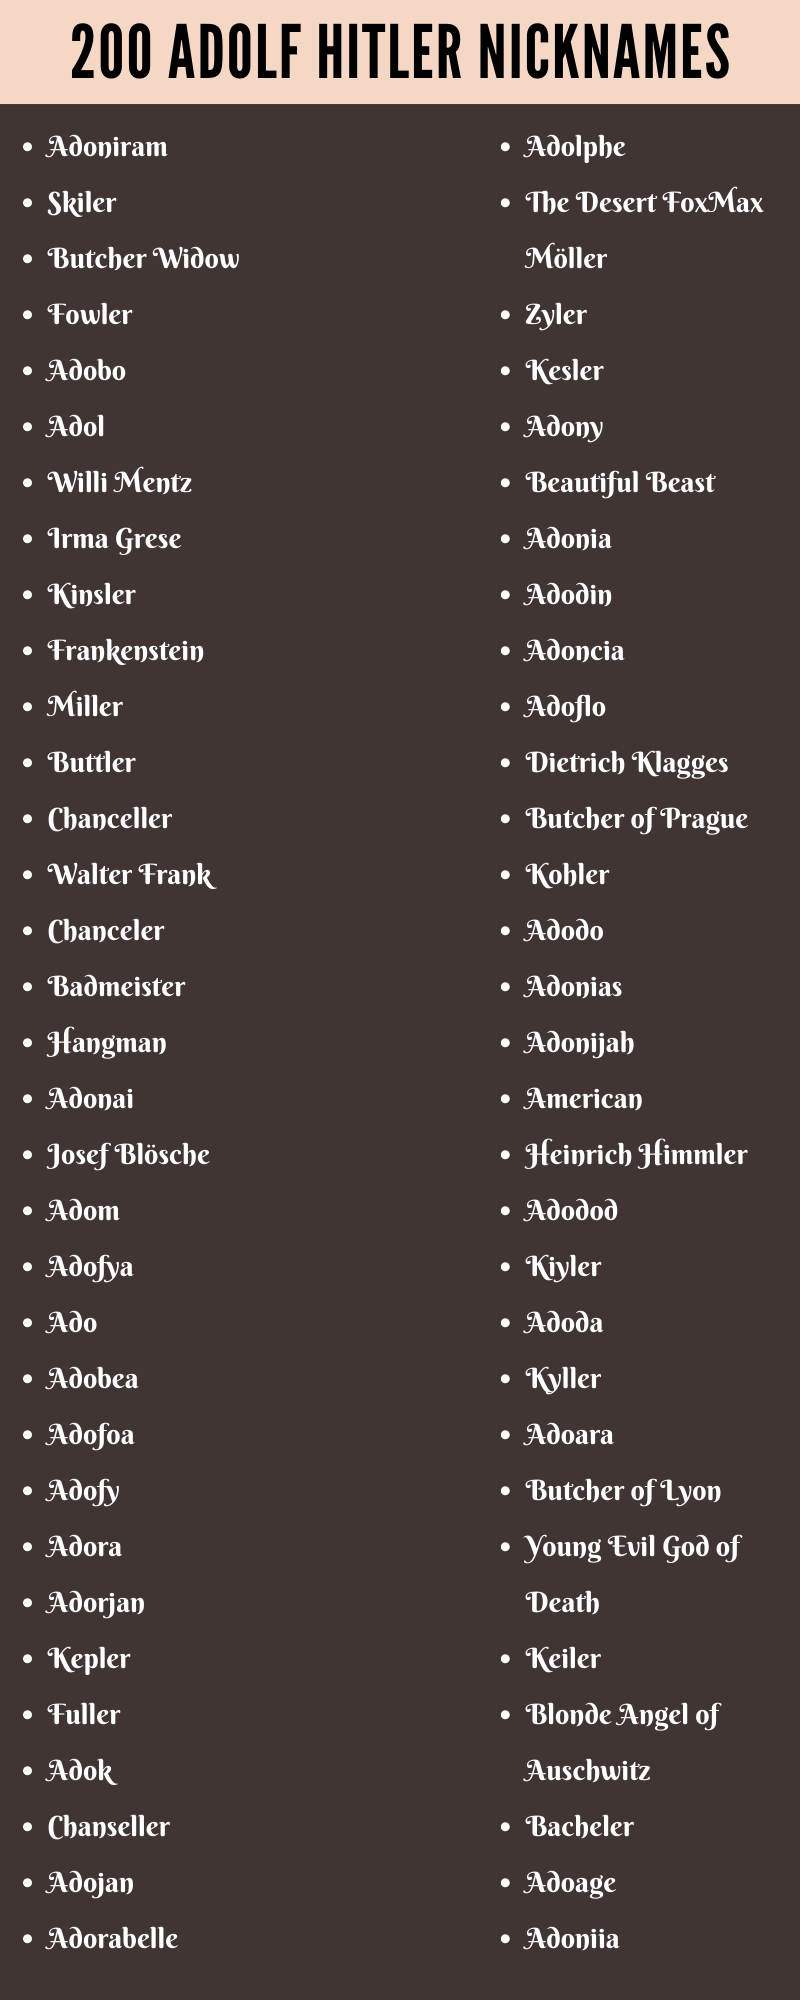 Adolf Hitler Nicknames